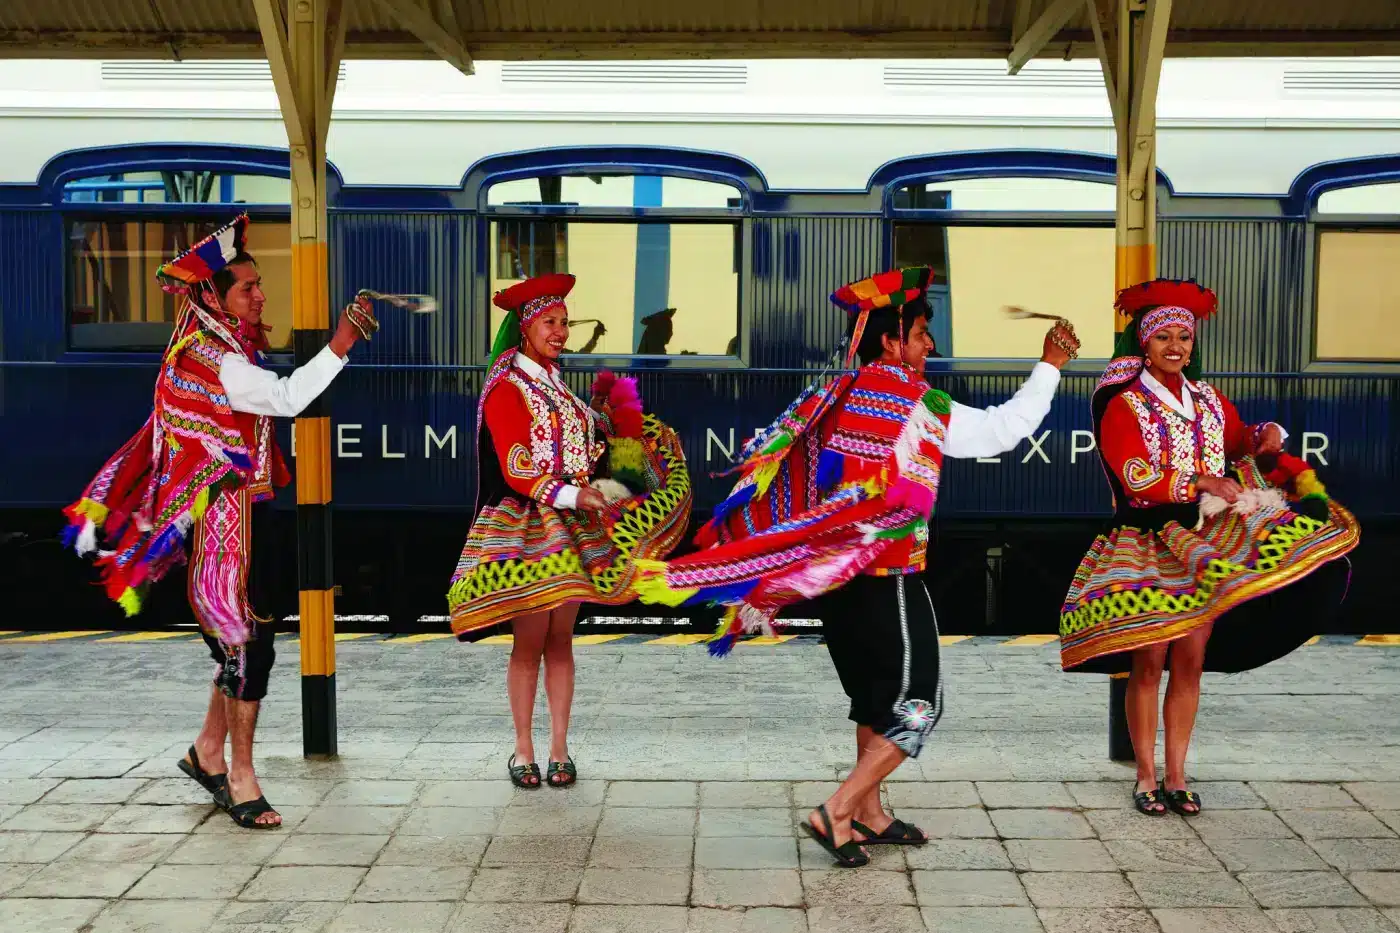 Voyage en train - Belmond Andean Explorer